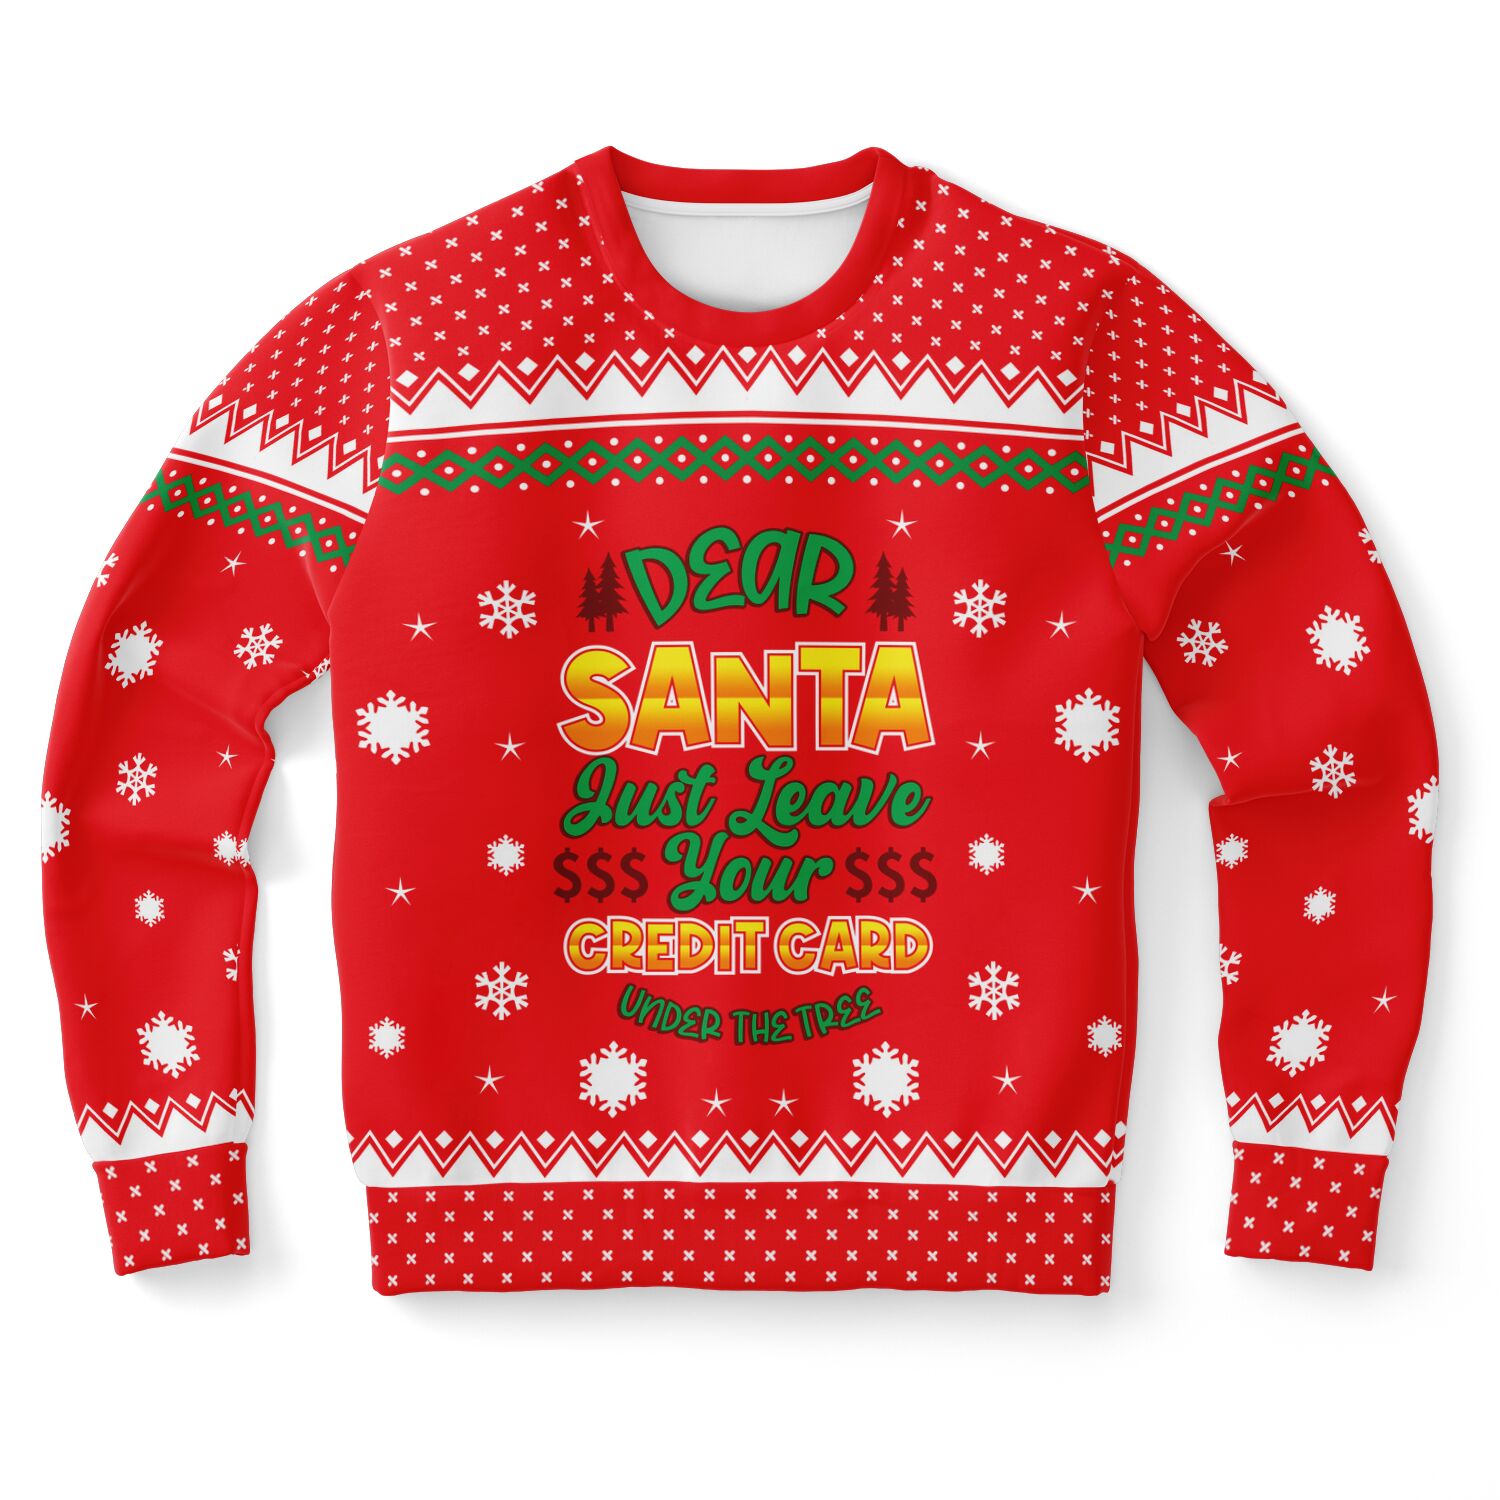 Credit Card Christmas Fashion Adult Sweatshirt